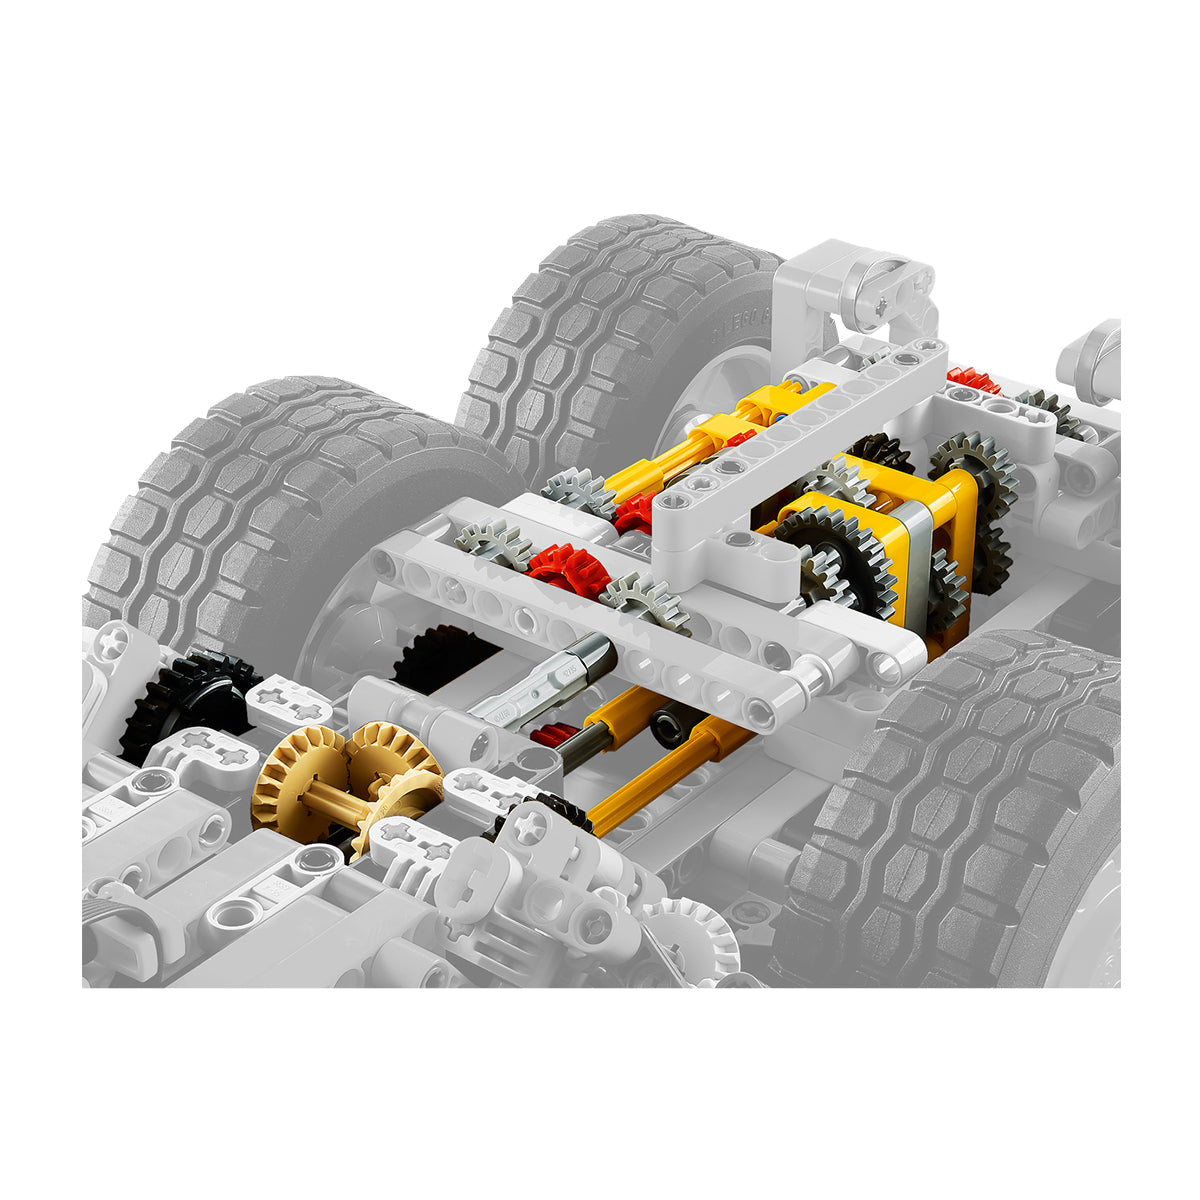 LEGO Technic - 6x6 Volvo Articulated Hauler 42114